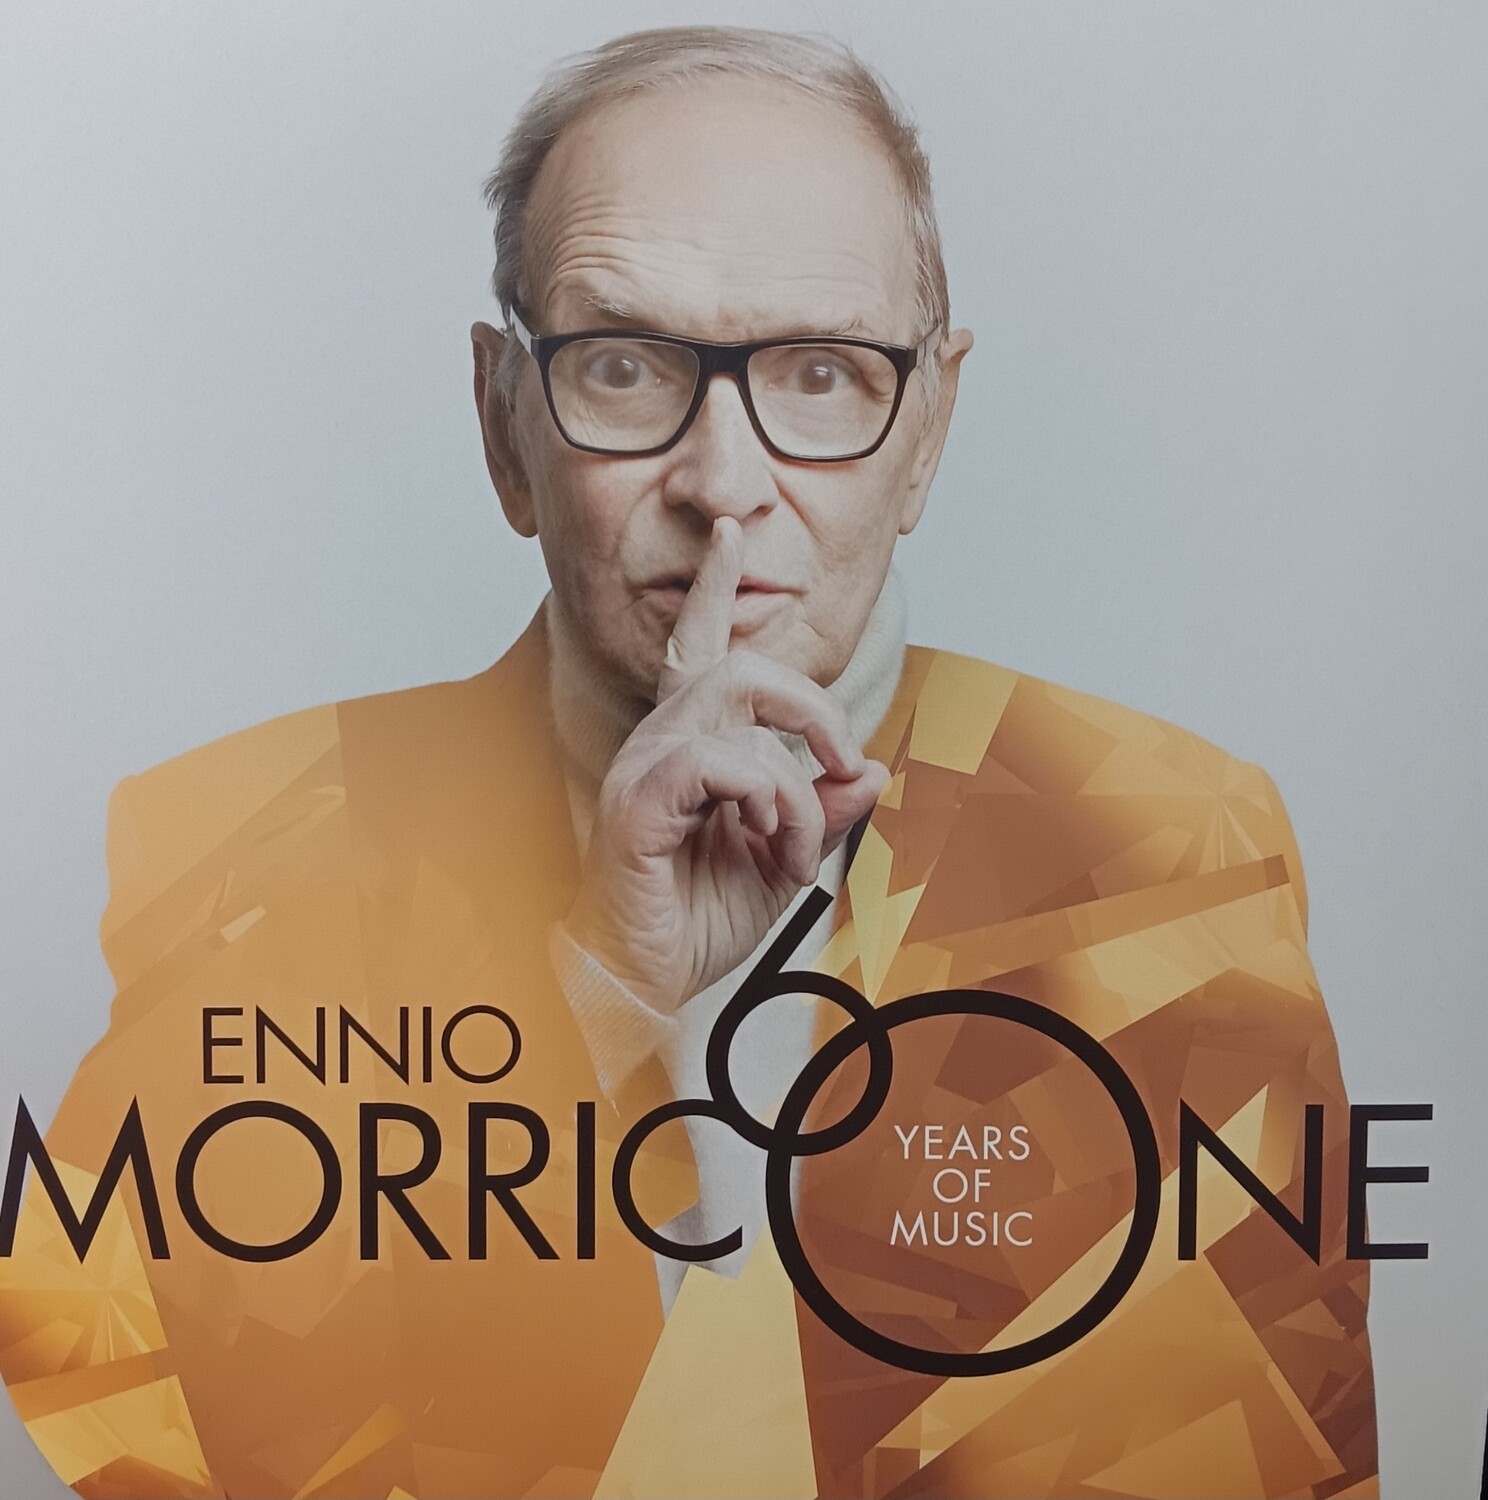 ENNIO MORRICONE - 60 Years of Music